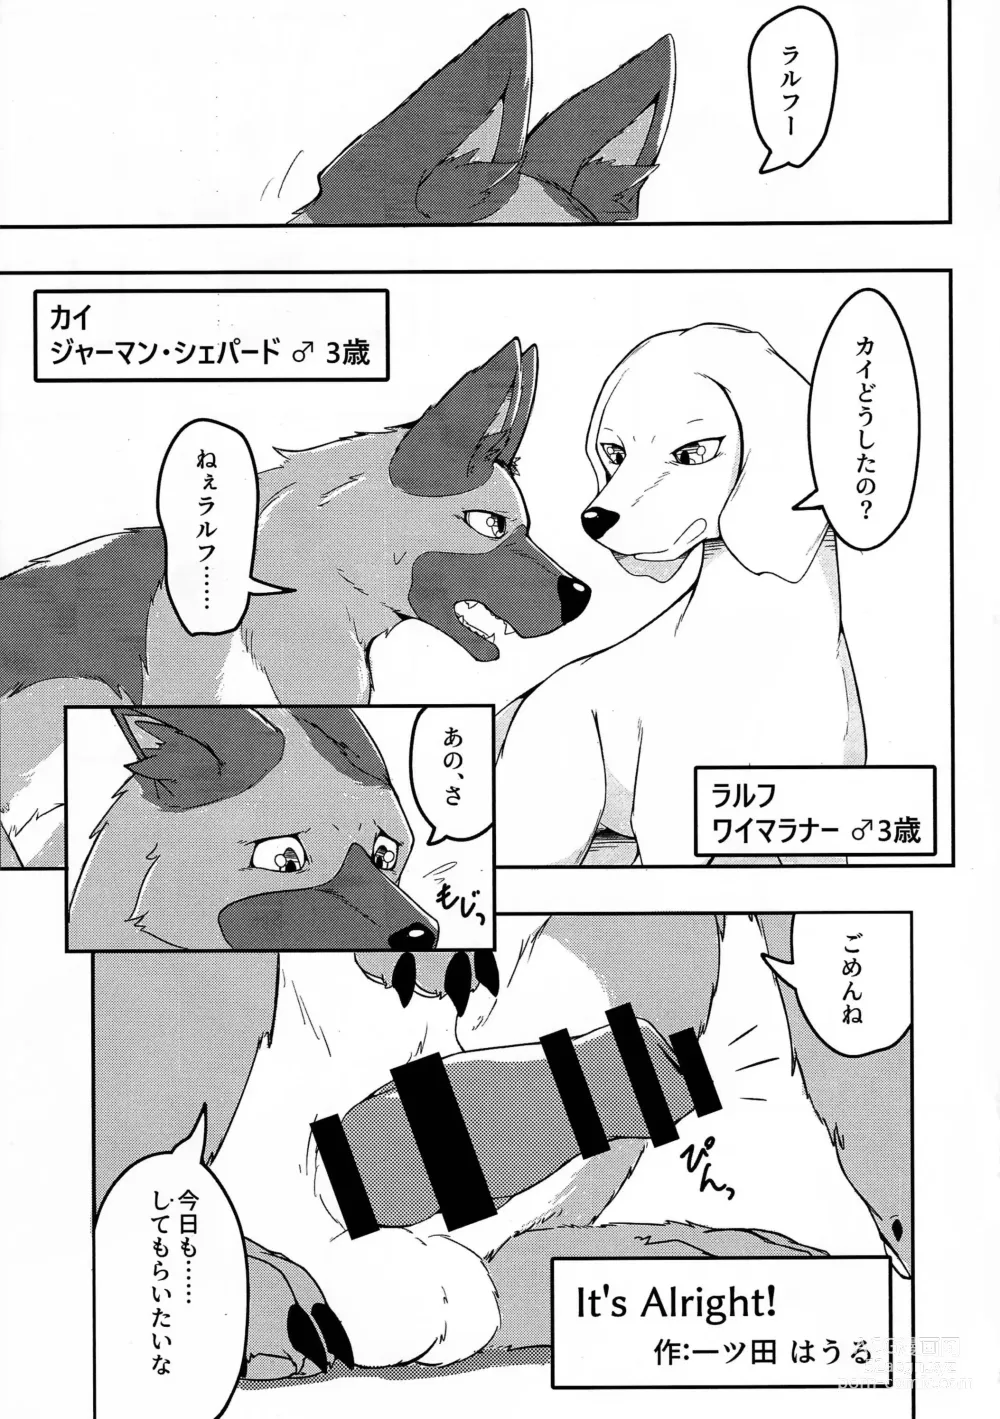 Page 4 of doujinshi Dearest 2